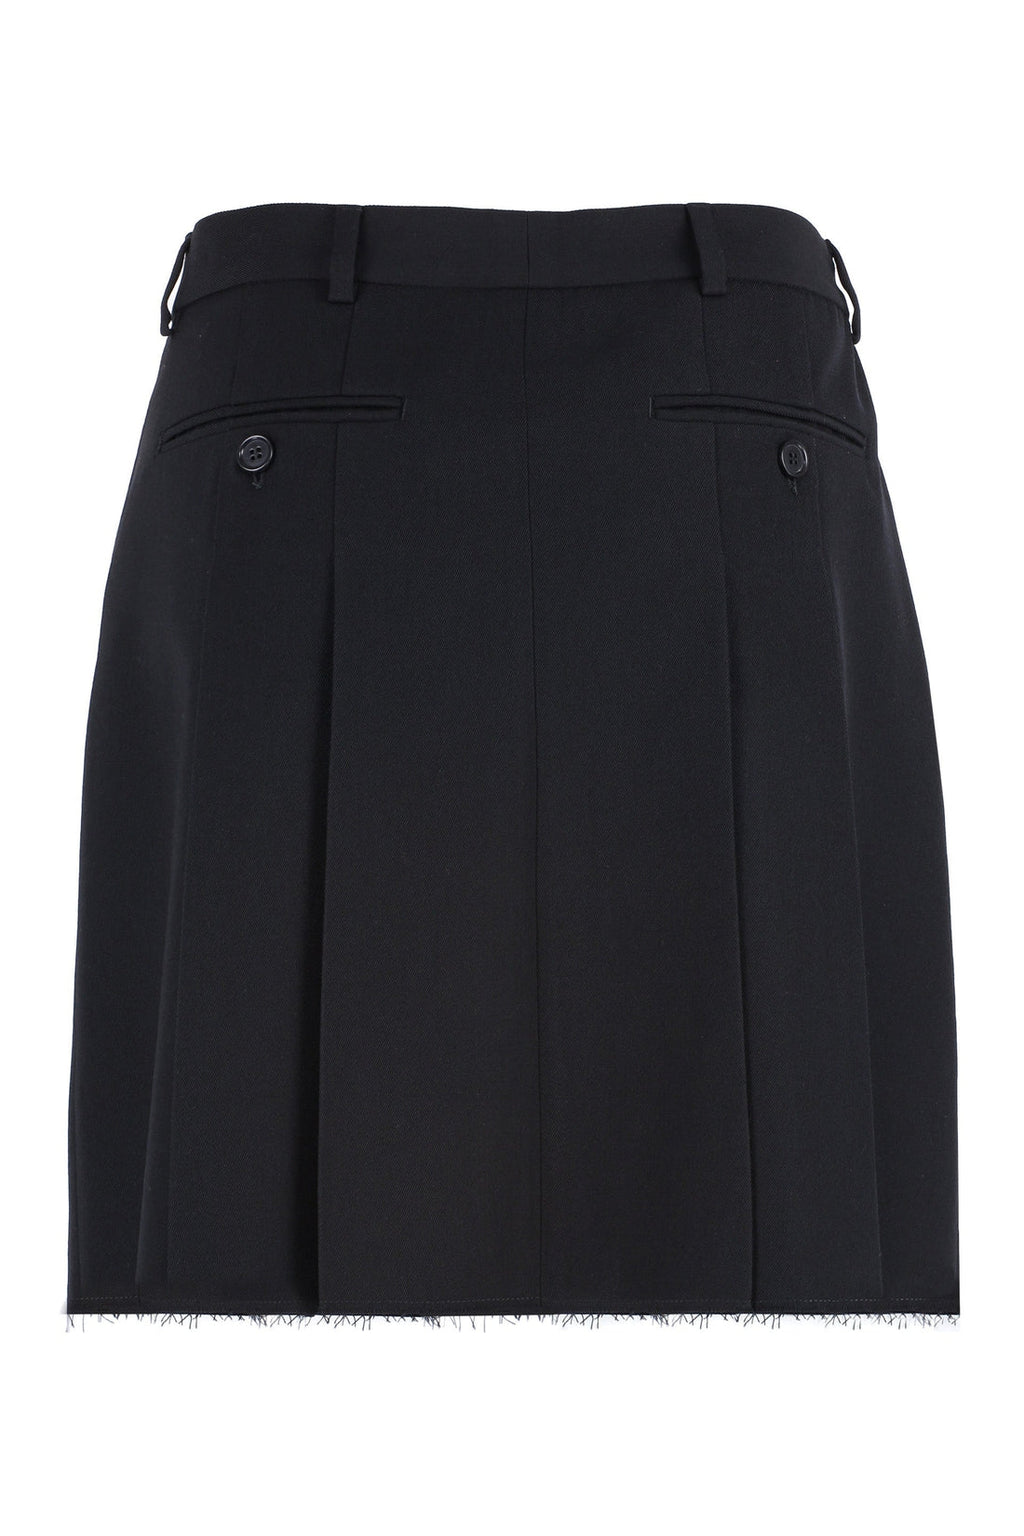 Aspesi-OUTLET-SALE-Wool mini skirt-ARCHIVIST